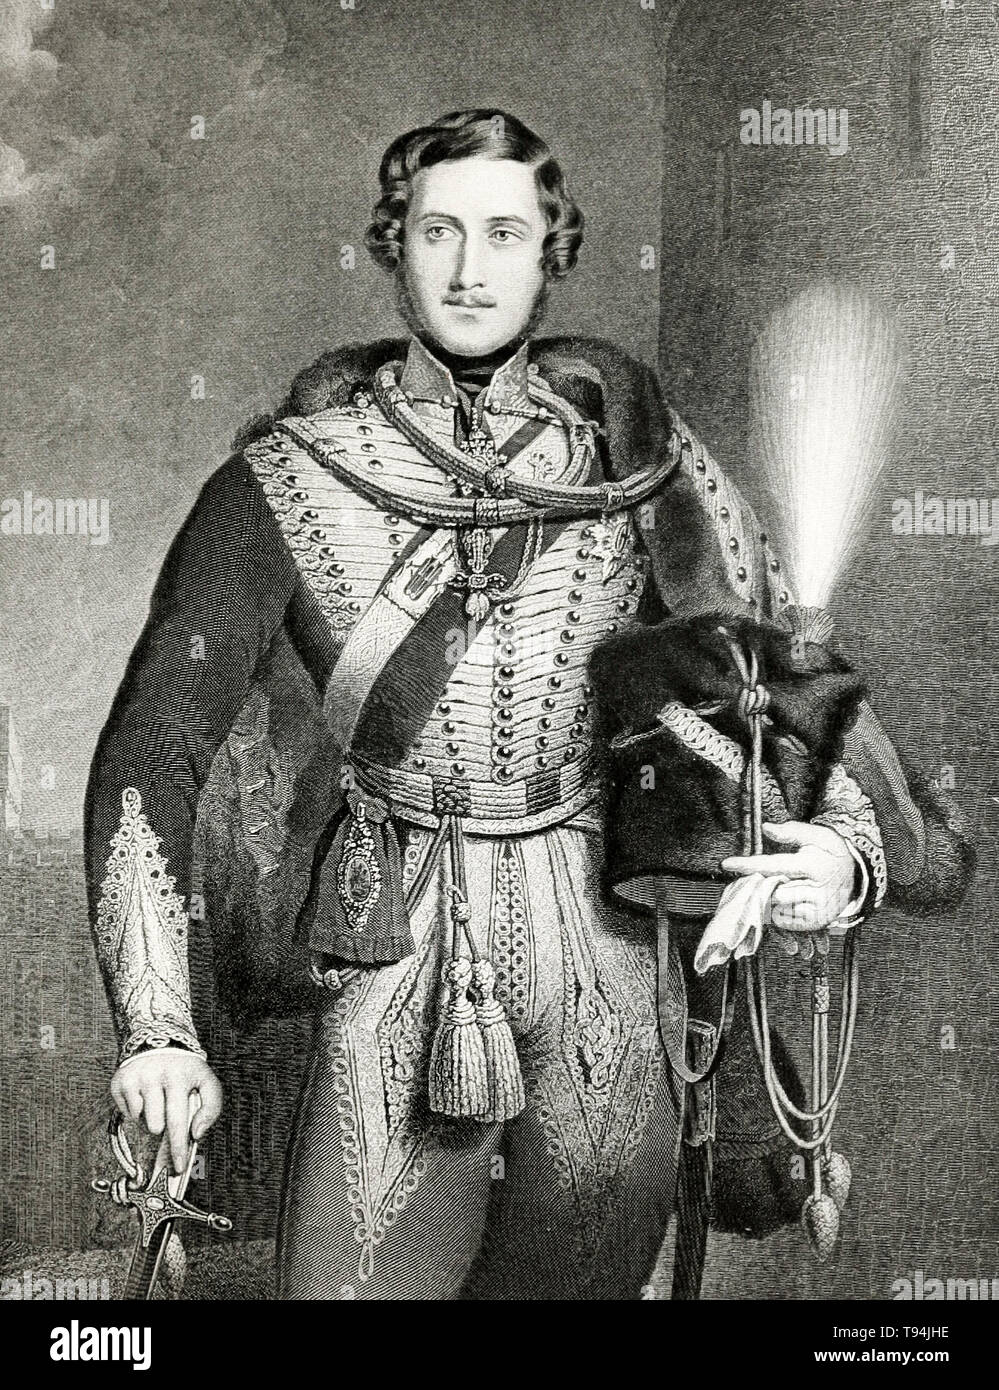 Prince Albert, in military uniform, portrait engraving, 1900 Stock Photo